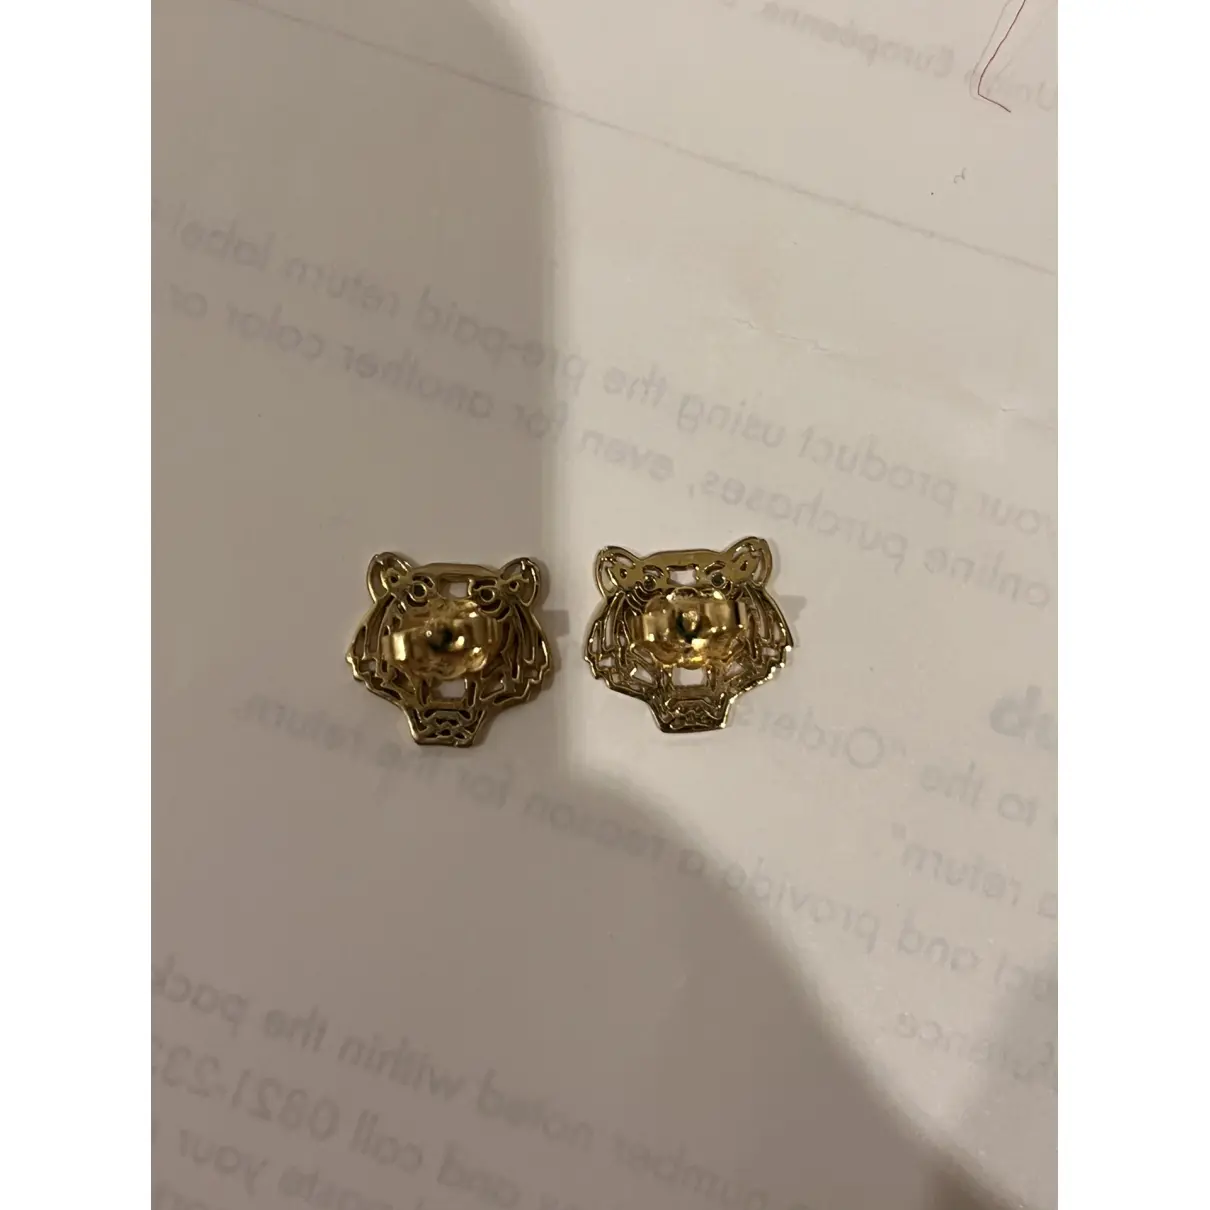 Buy Kenzo Tiger earrings online